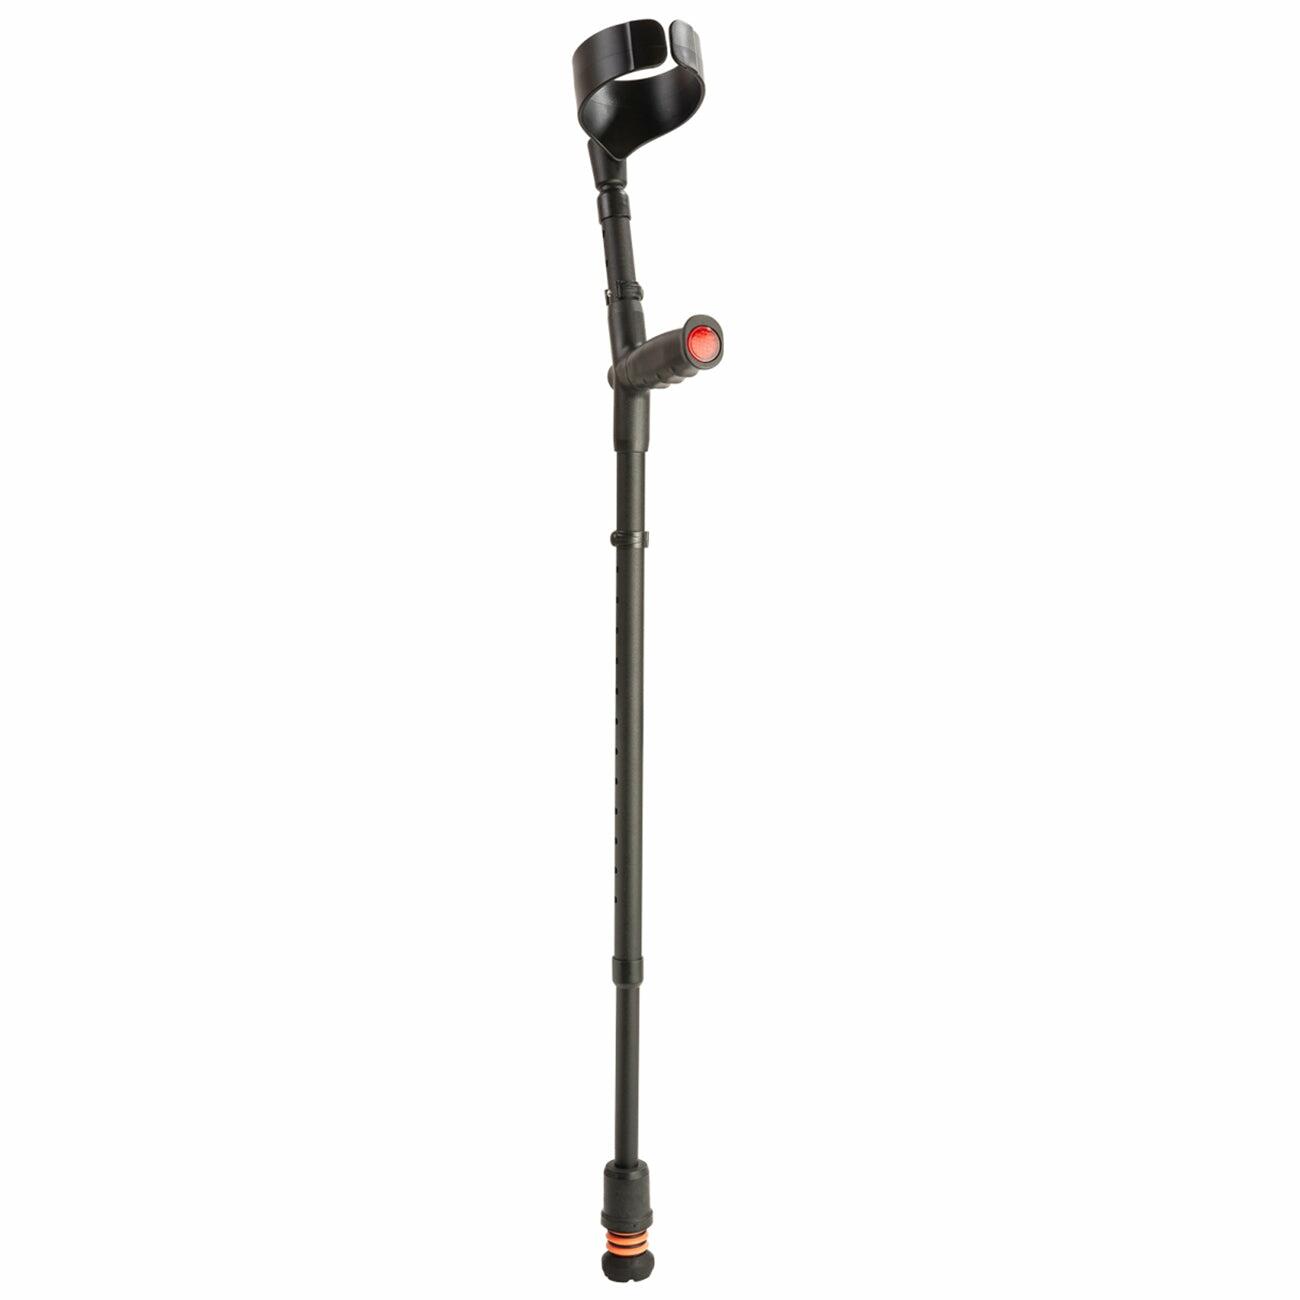 A single black Flexyfoot Soft Grip Double Adjustable Crutch